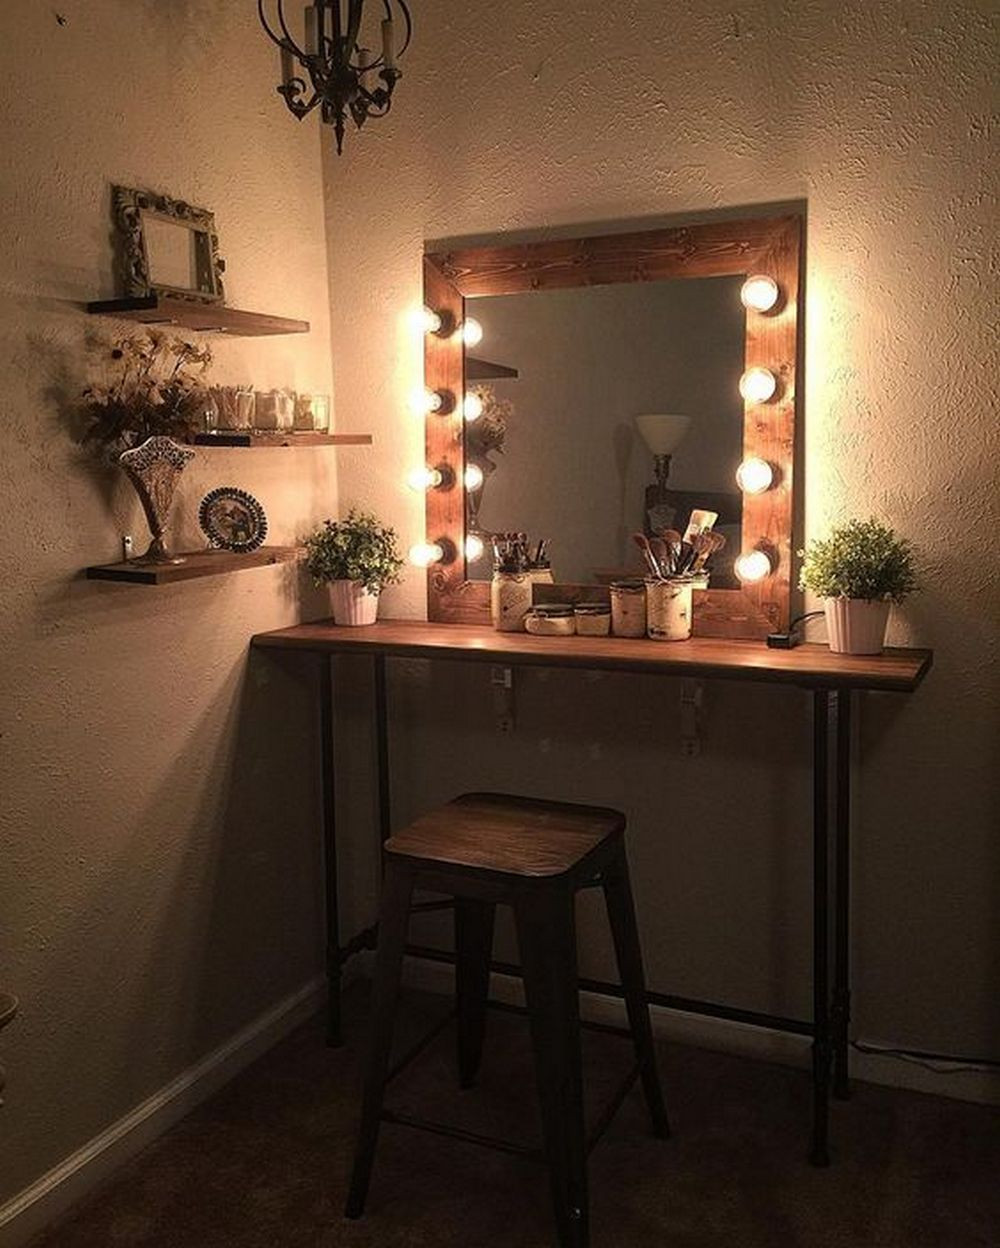 DIY Hollywood Lighted Vanity Mirror
 DIY Hollywood Lighted Vanity Mirror – DIY projects for